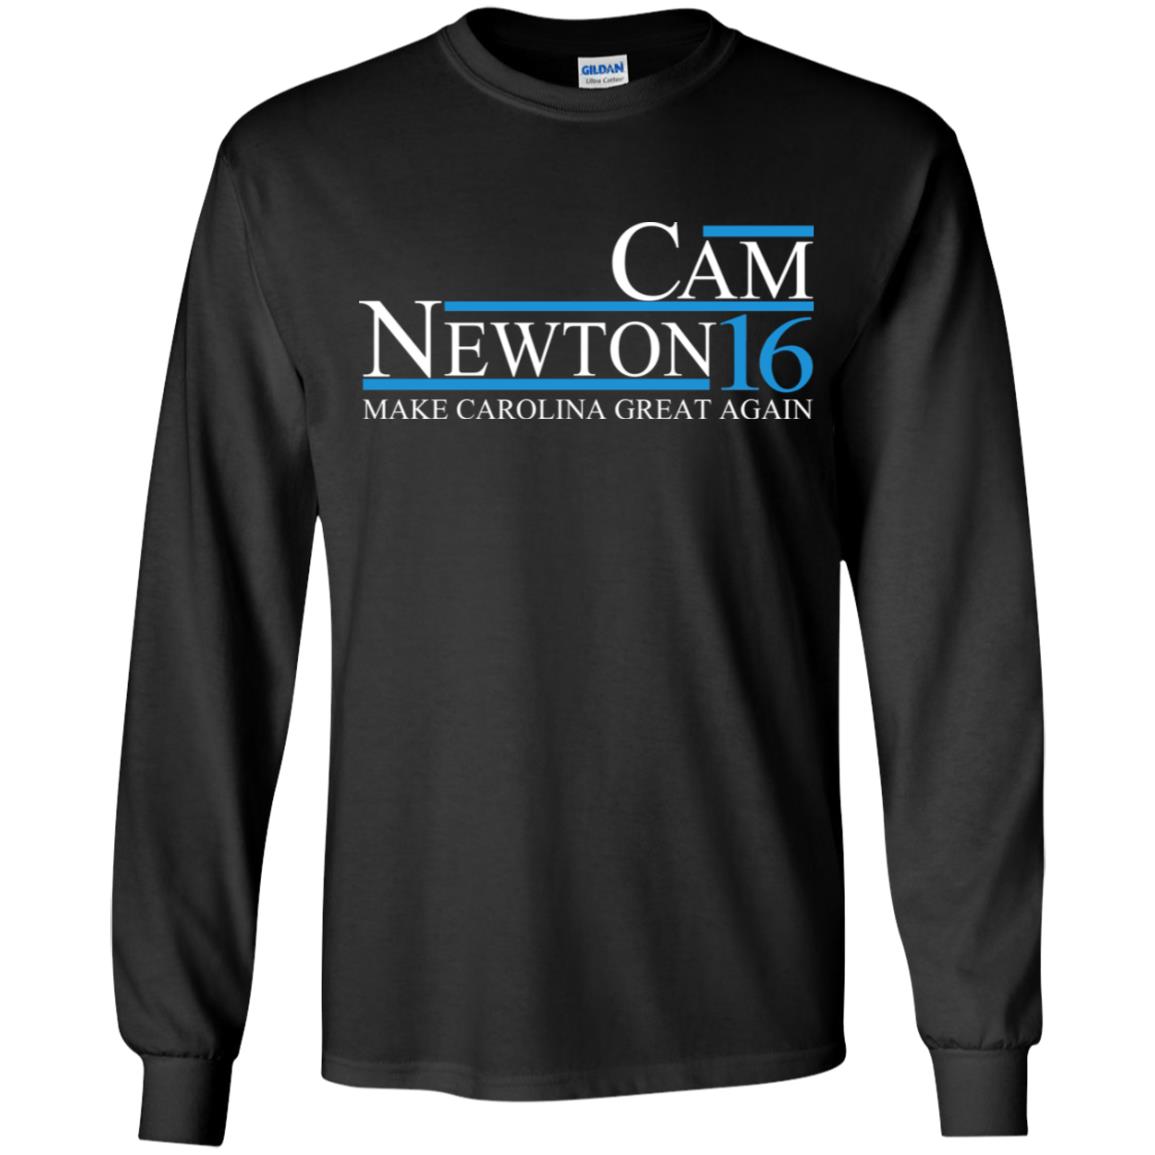 Cam Newton 16 youth shirt